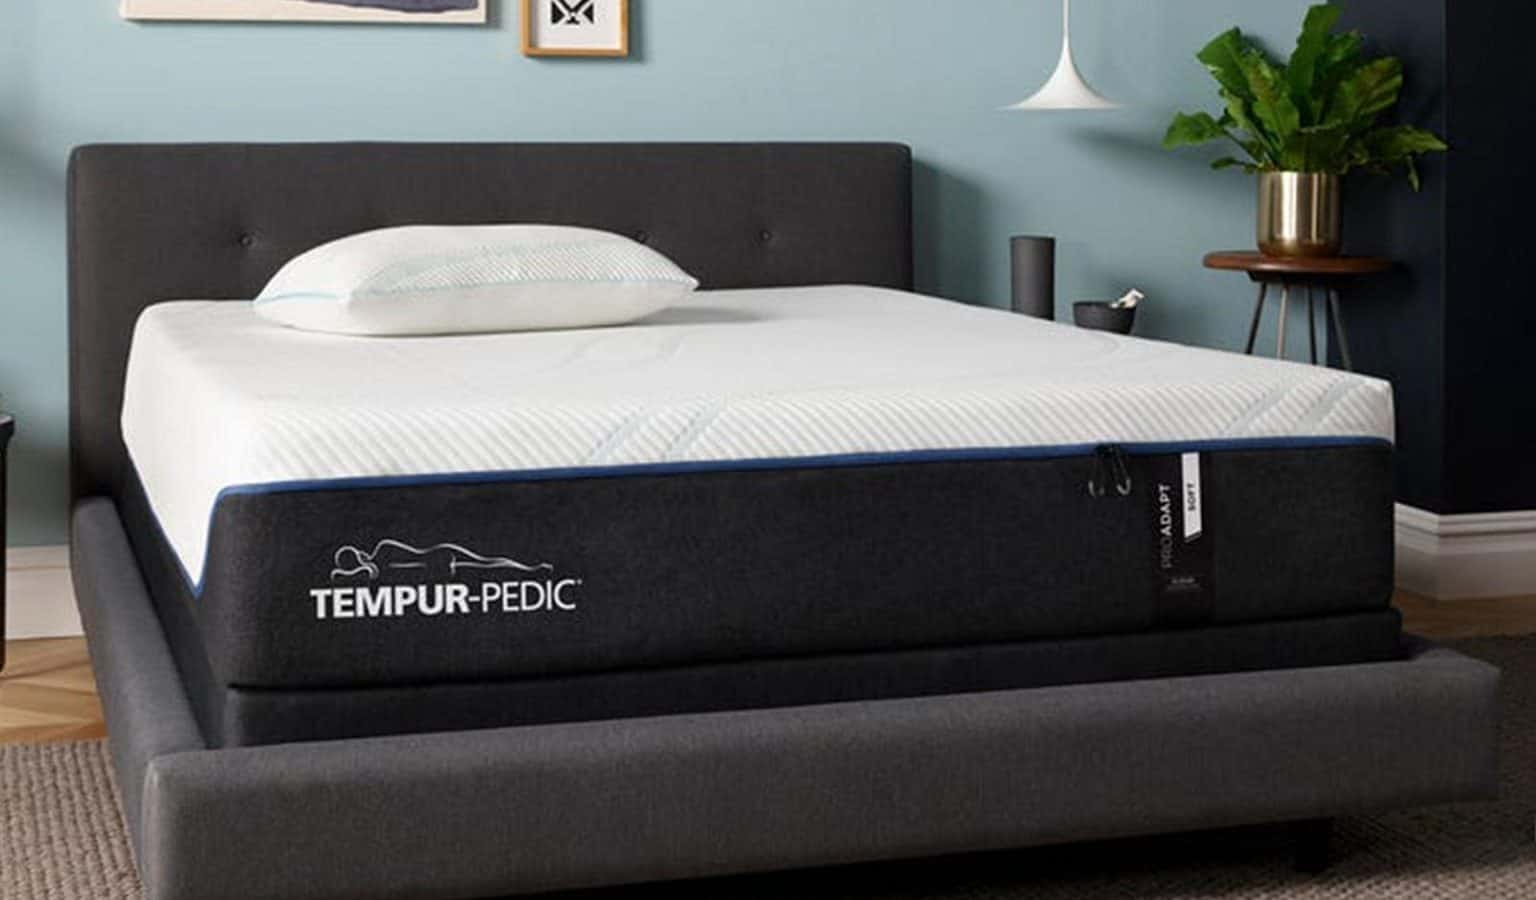 best tempurpedic mattress for back pain